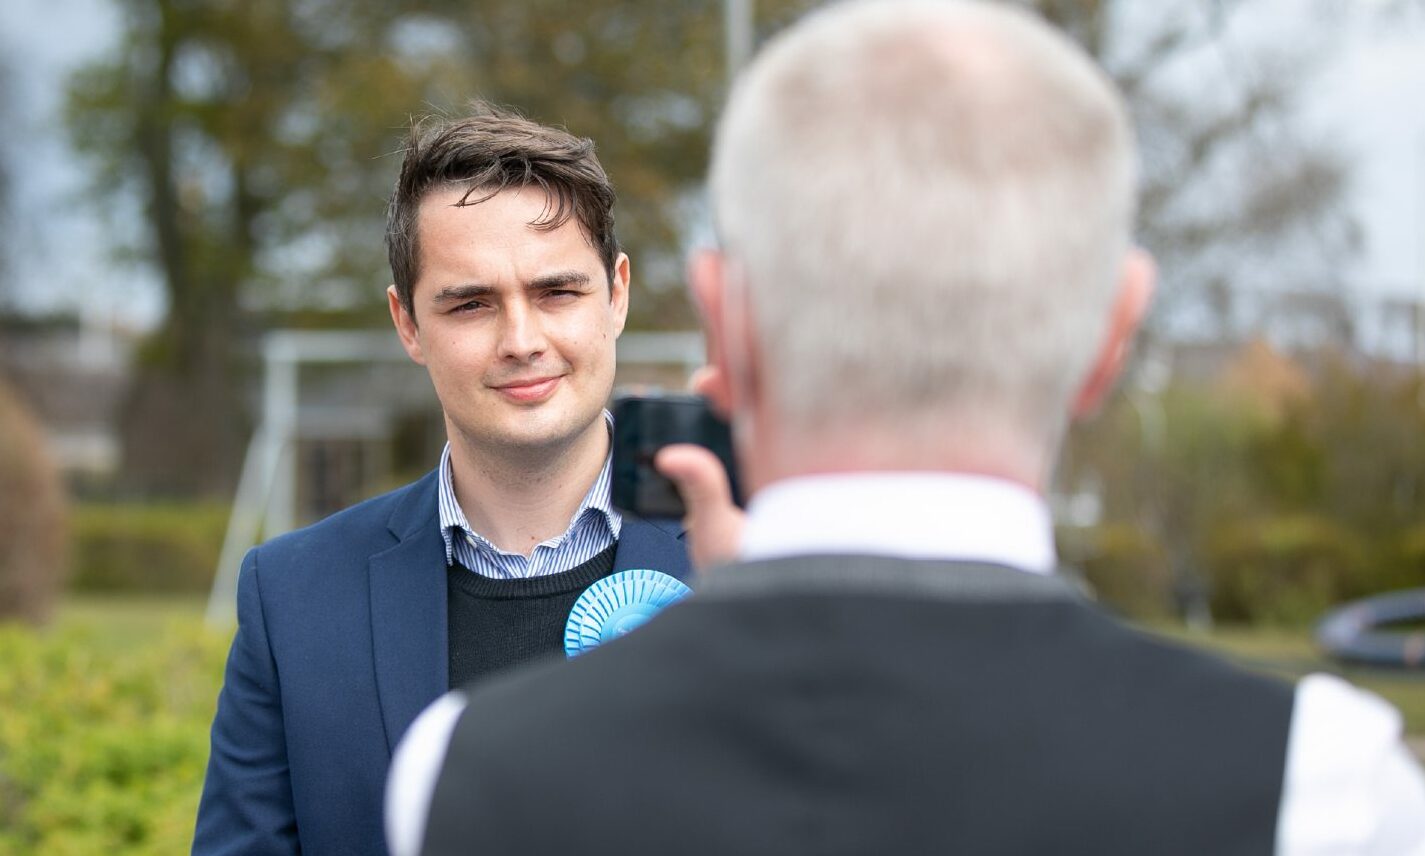 Braden Davy is interviewed during the 2021 Scottish Parliament election.